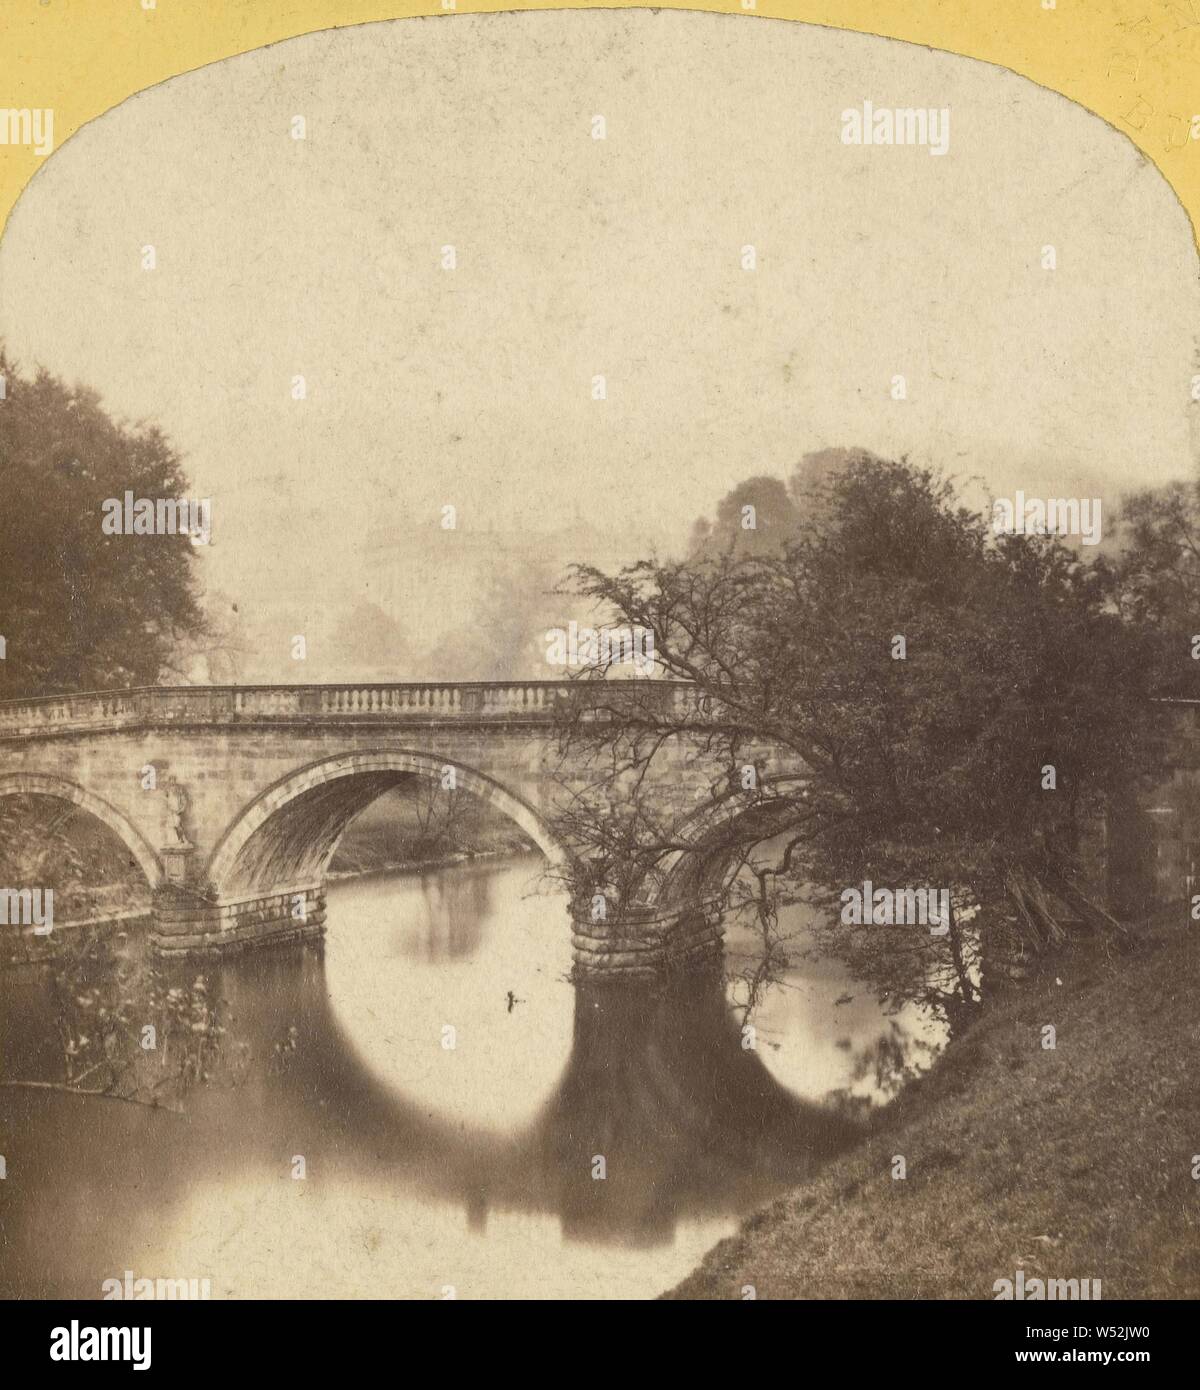 The Bridge - Chatsworth, B.W. Bentley (British, active 1870s - 1880s), about 1865, Albumen silver print Stock Photo